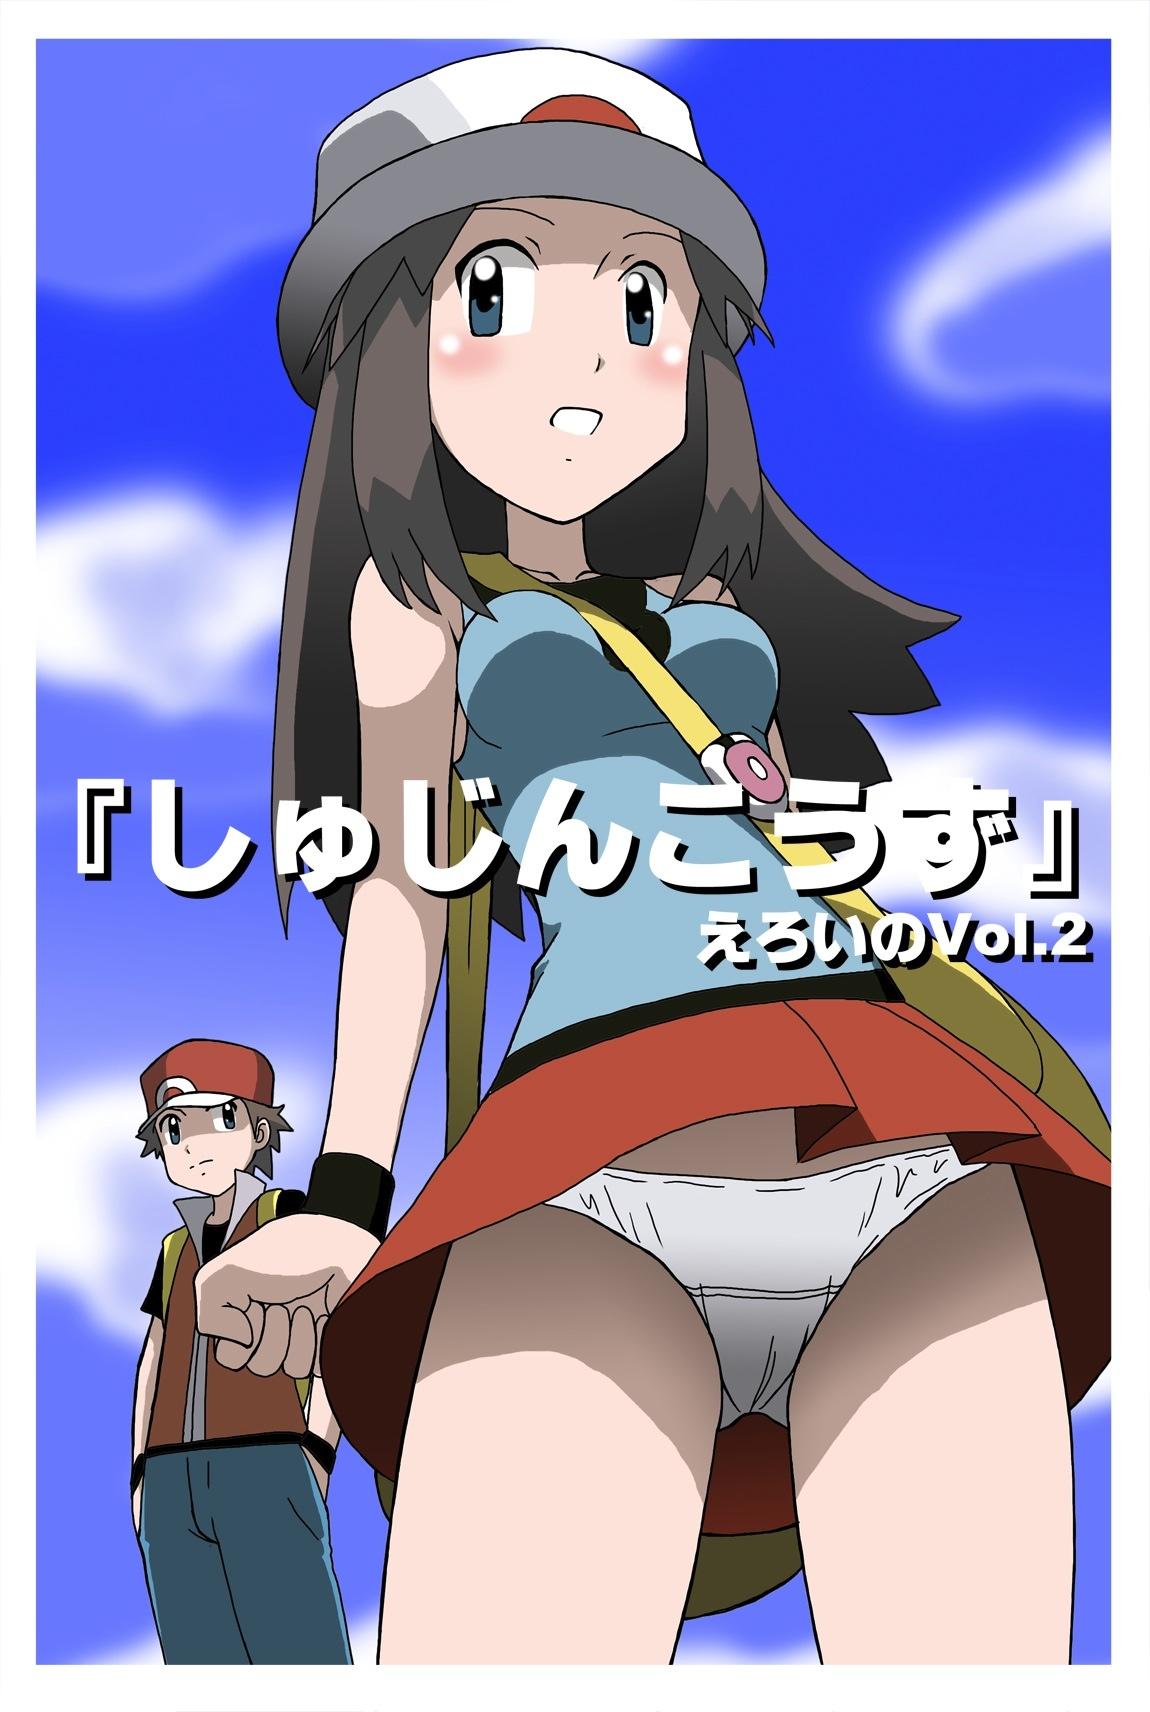 Exgirlfriend 「Shujinkouzu」 Eroi no Vol.2 - Pokemon Speculum - Page 1